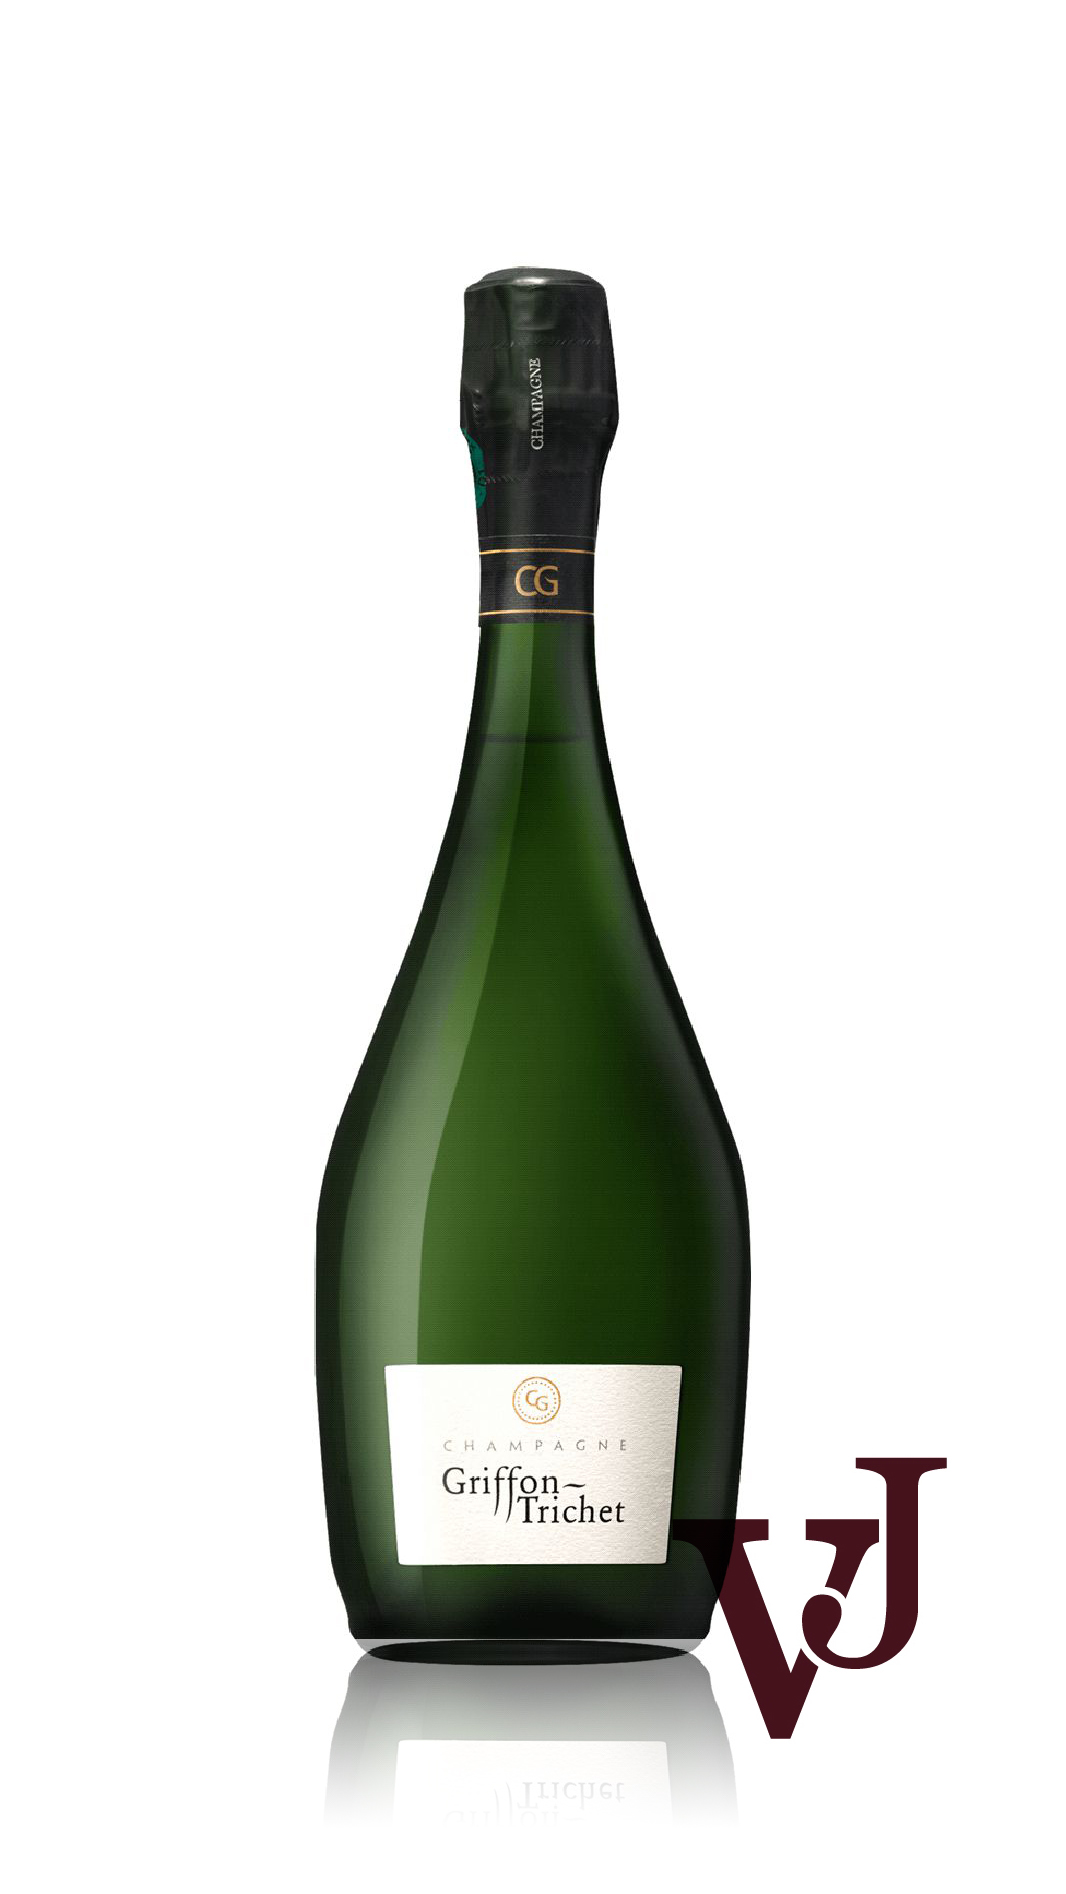 Mousserande Vin - Griffon-Trichet Grande Réserve 2016 artikel nummer 7395401 från producenten Champagne Griffon-Trichet från området Frankrike